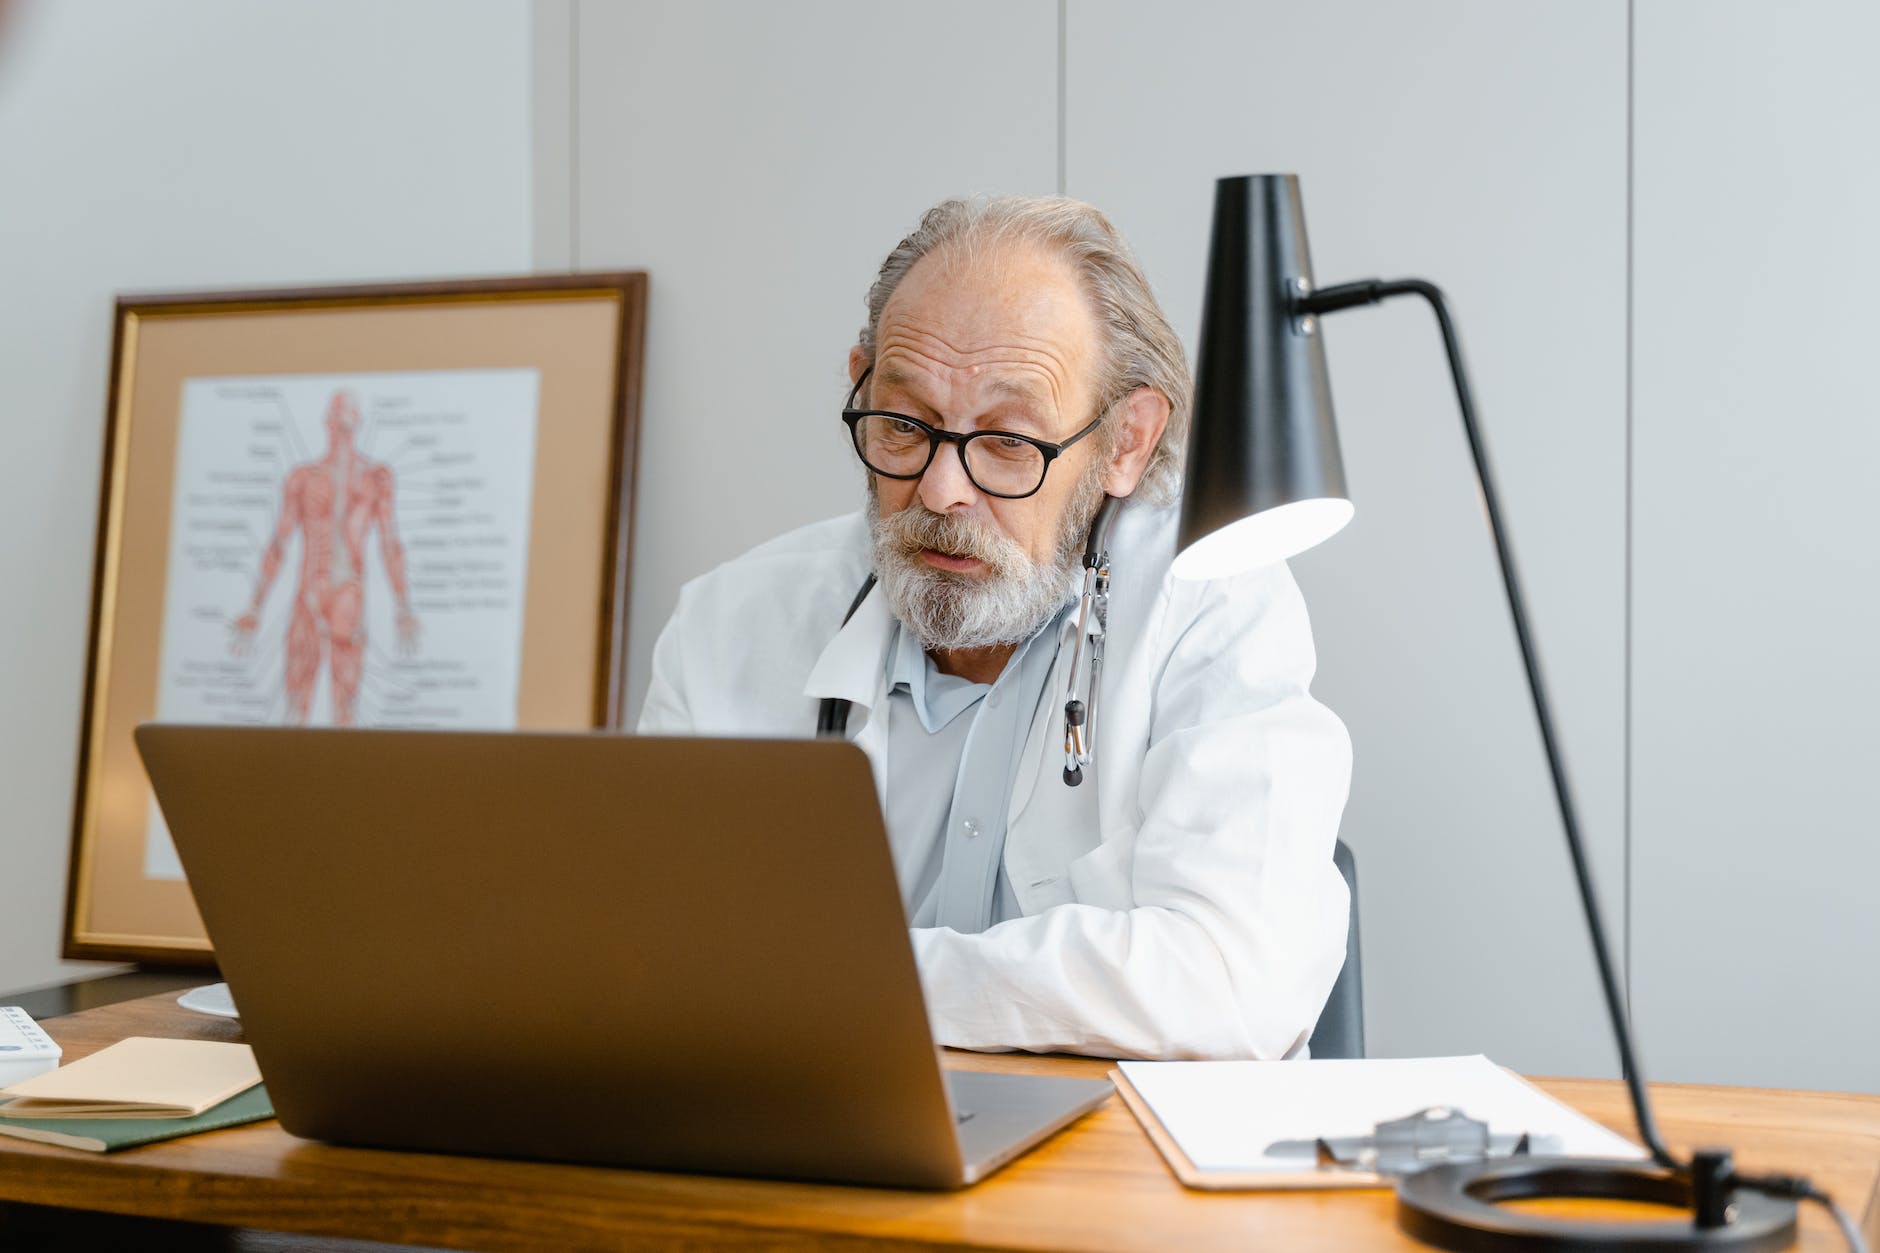 an elderly man in white lab coat talking while facing the laptop